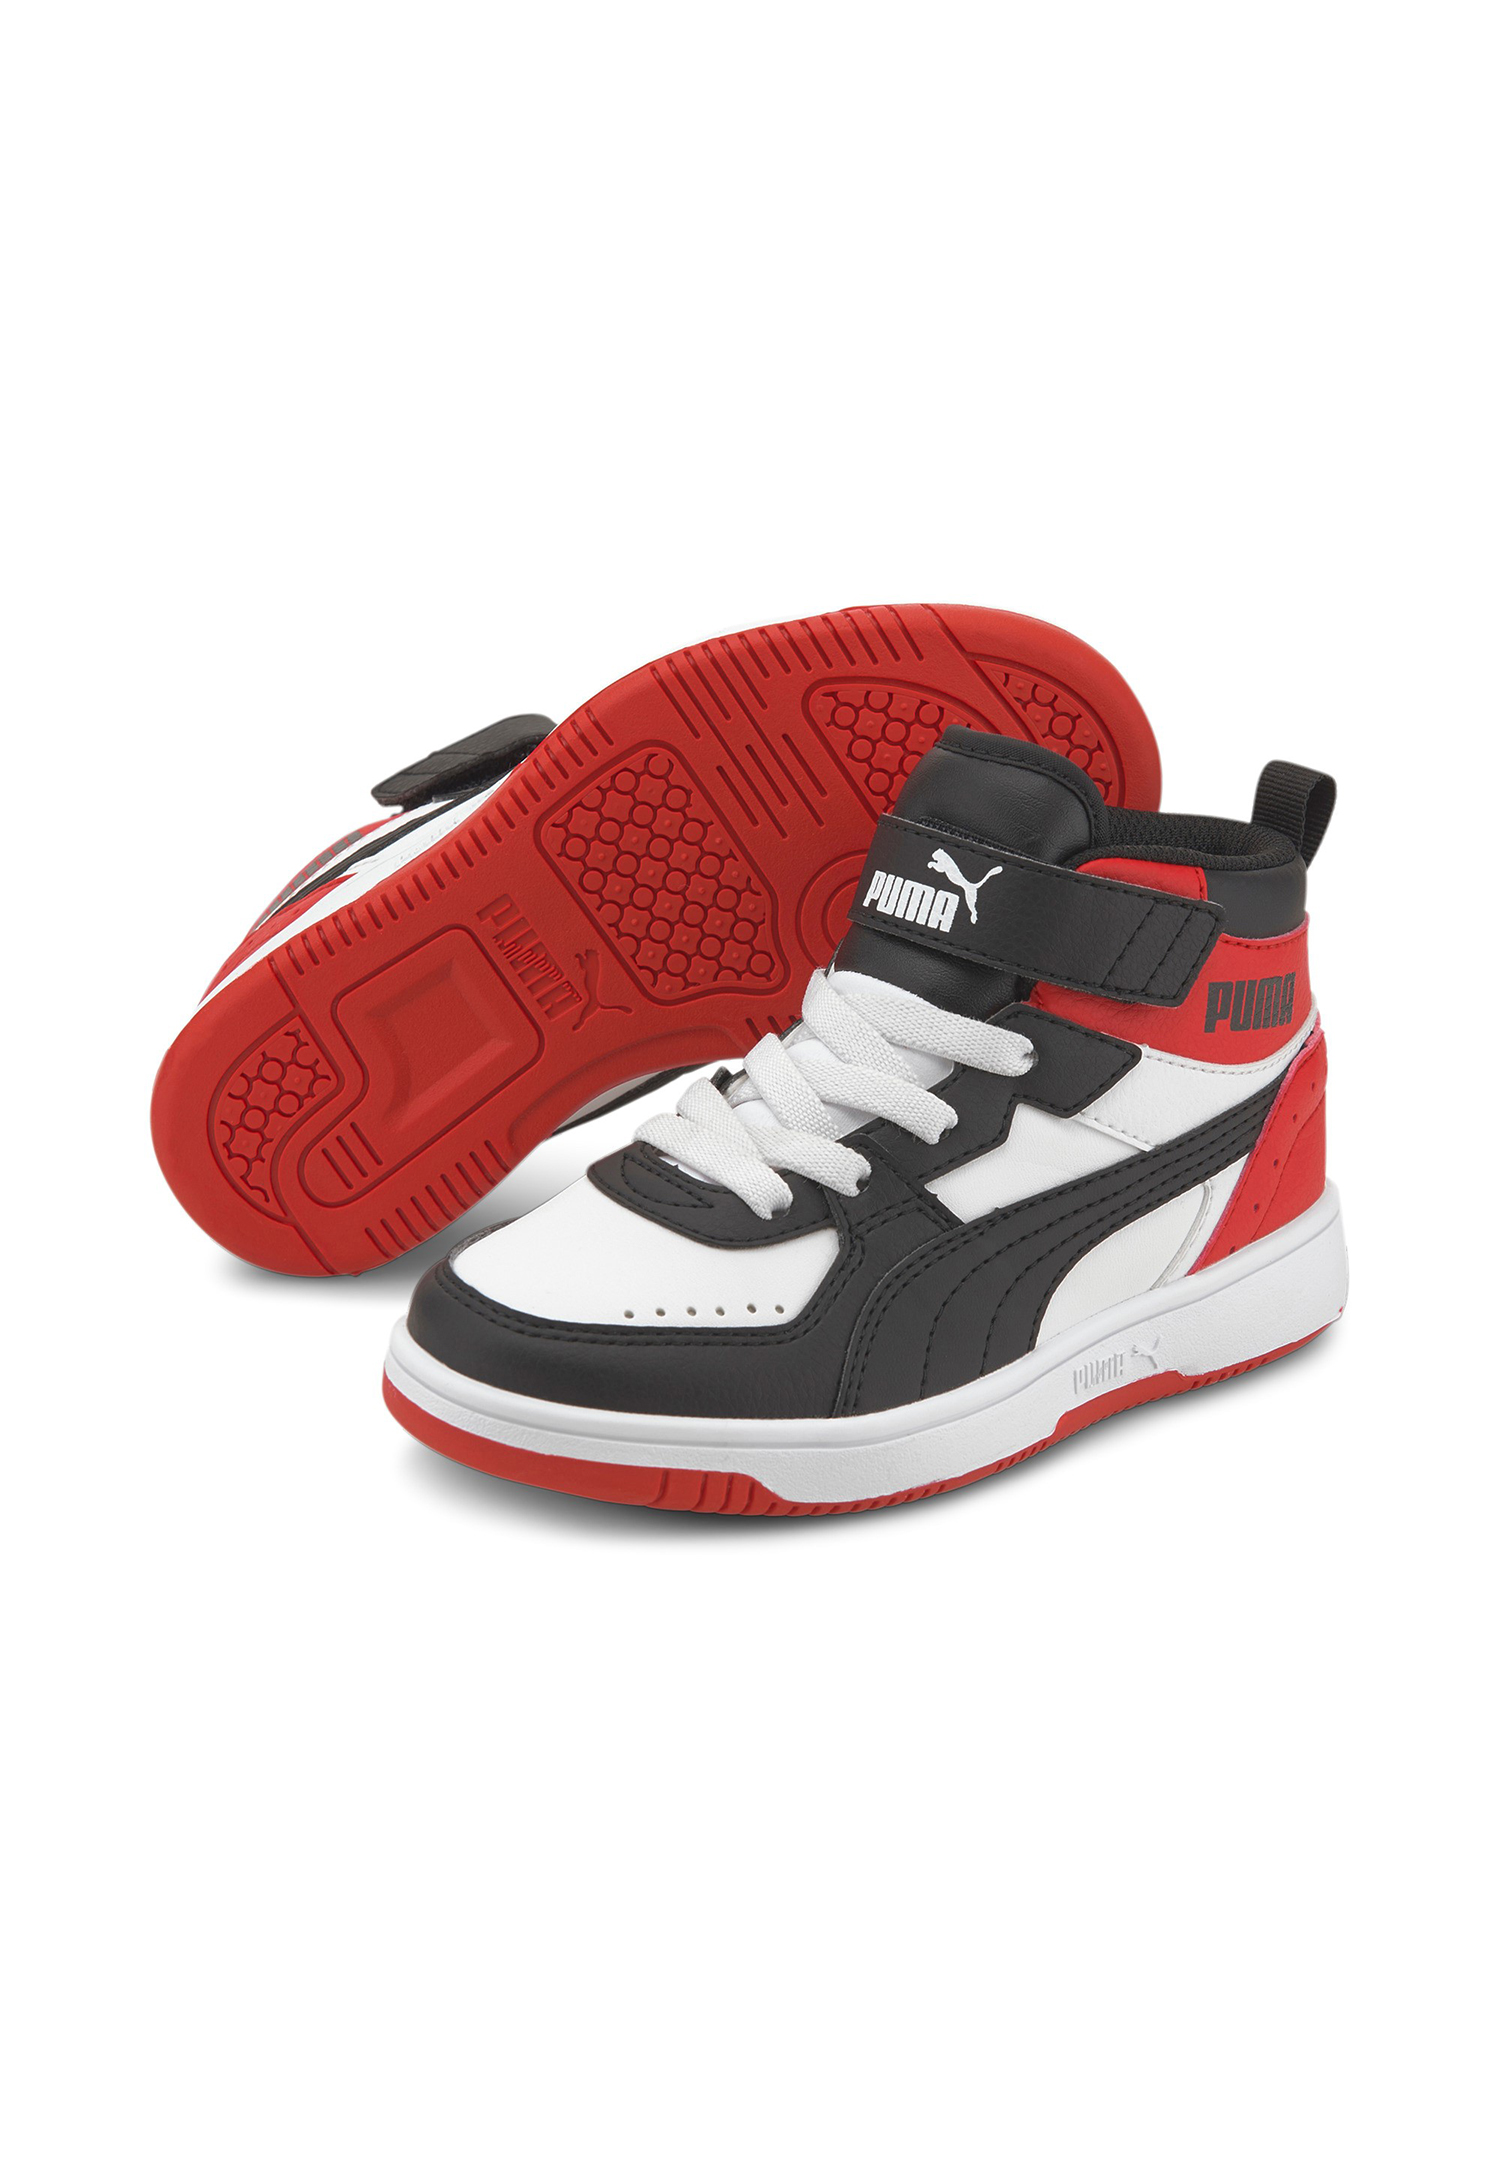 PUMA Rebound Joy AC PS Kinder Sneaker Sportschuhe 374688 mehrfarbig